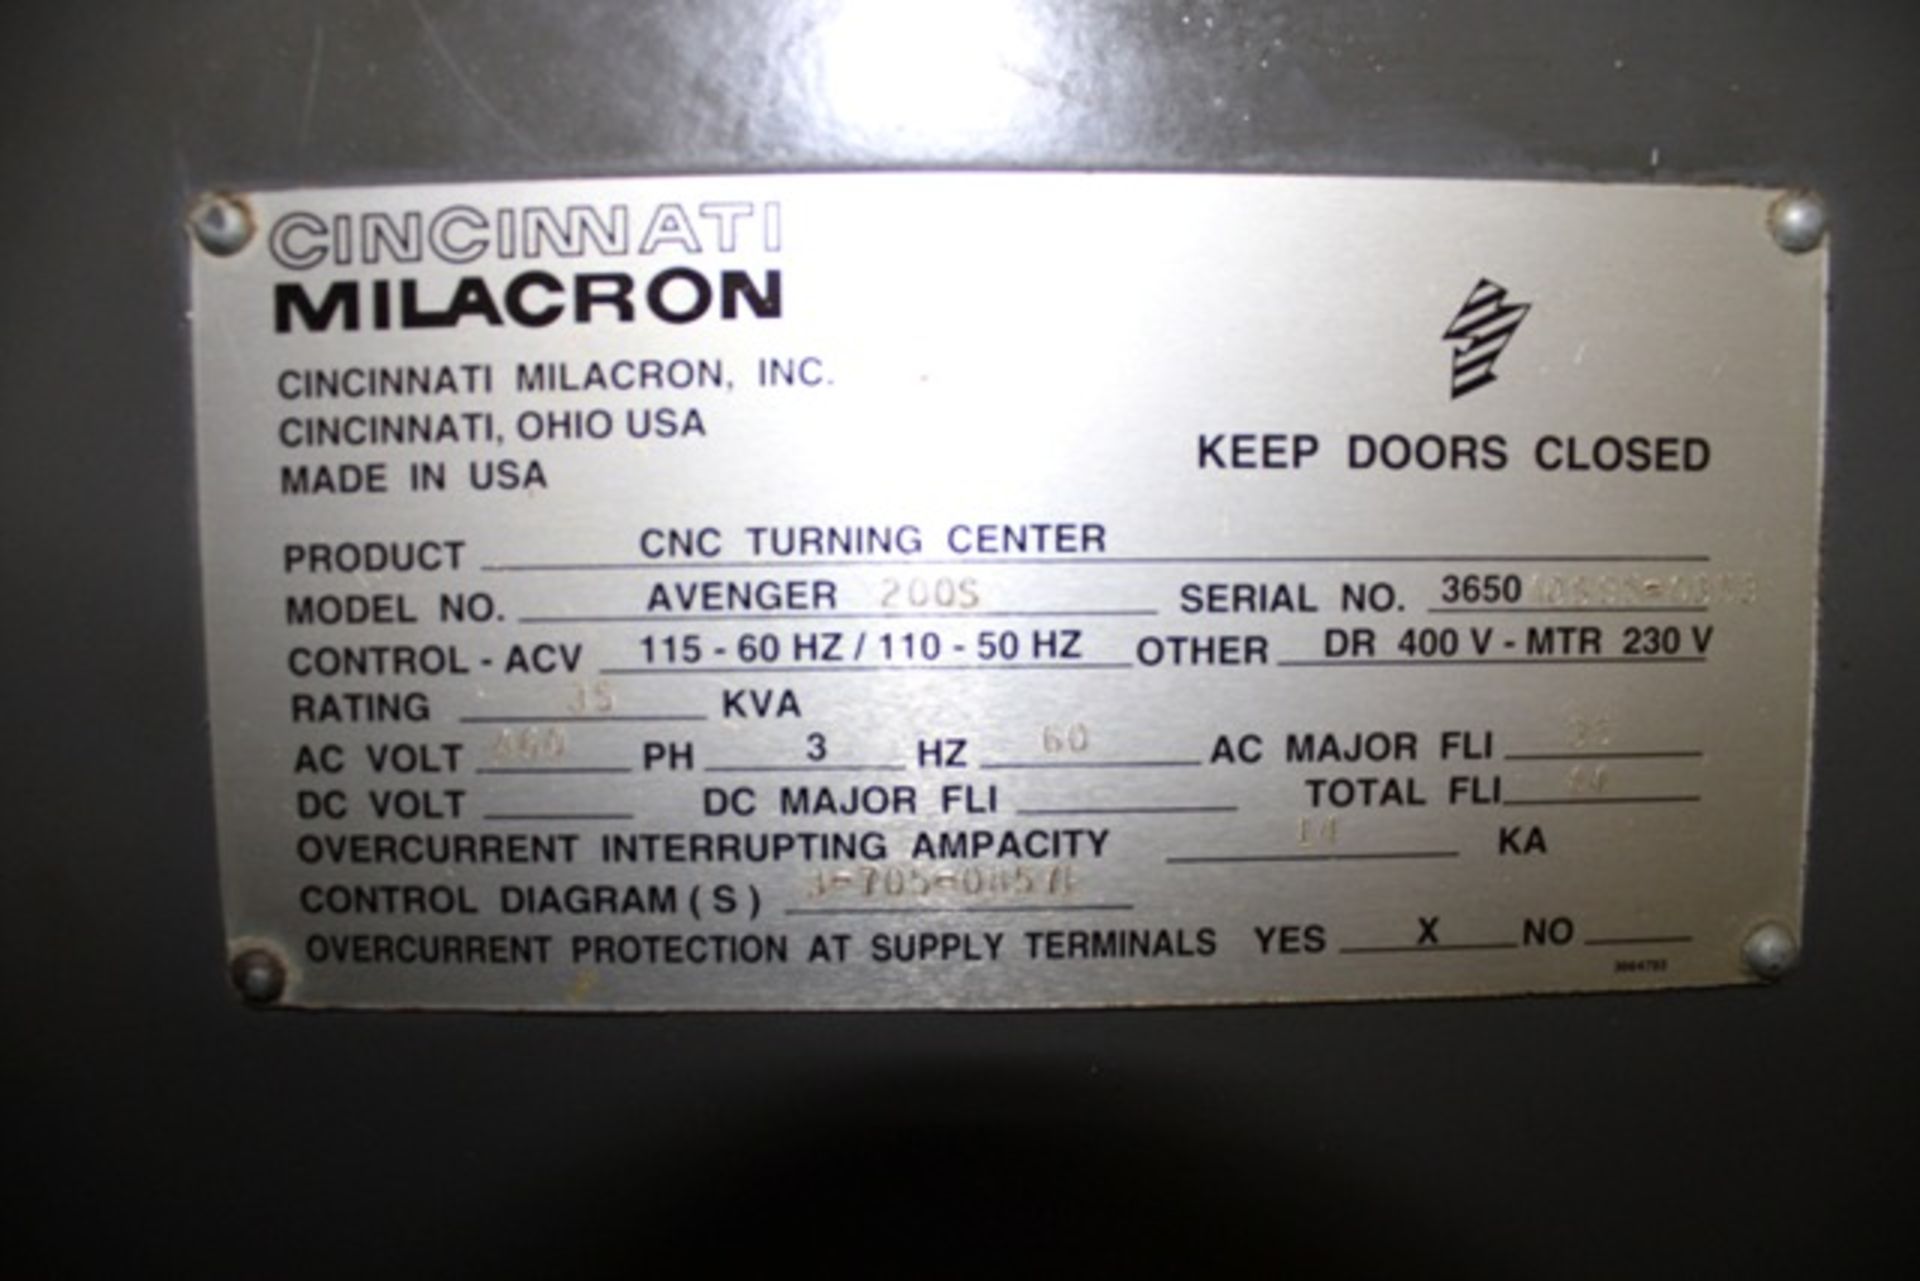 Cincinnati Milacron Avenger 200S CNC Turning Center - Image 5 of 5